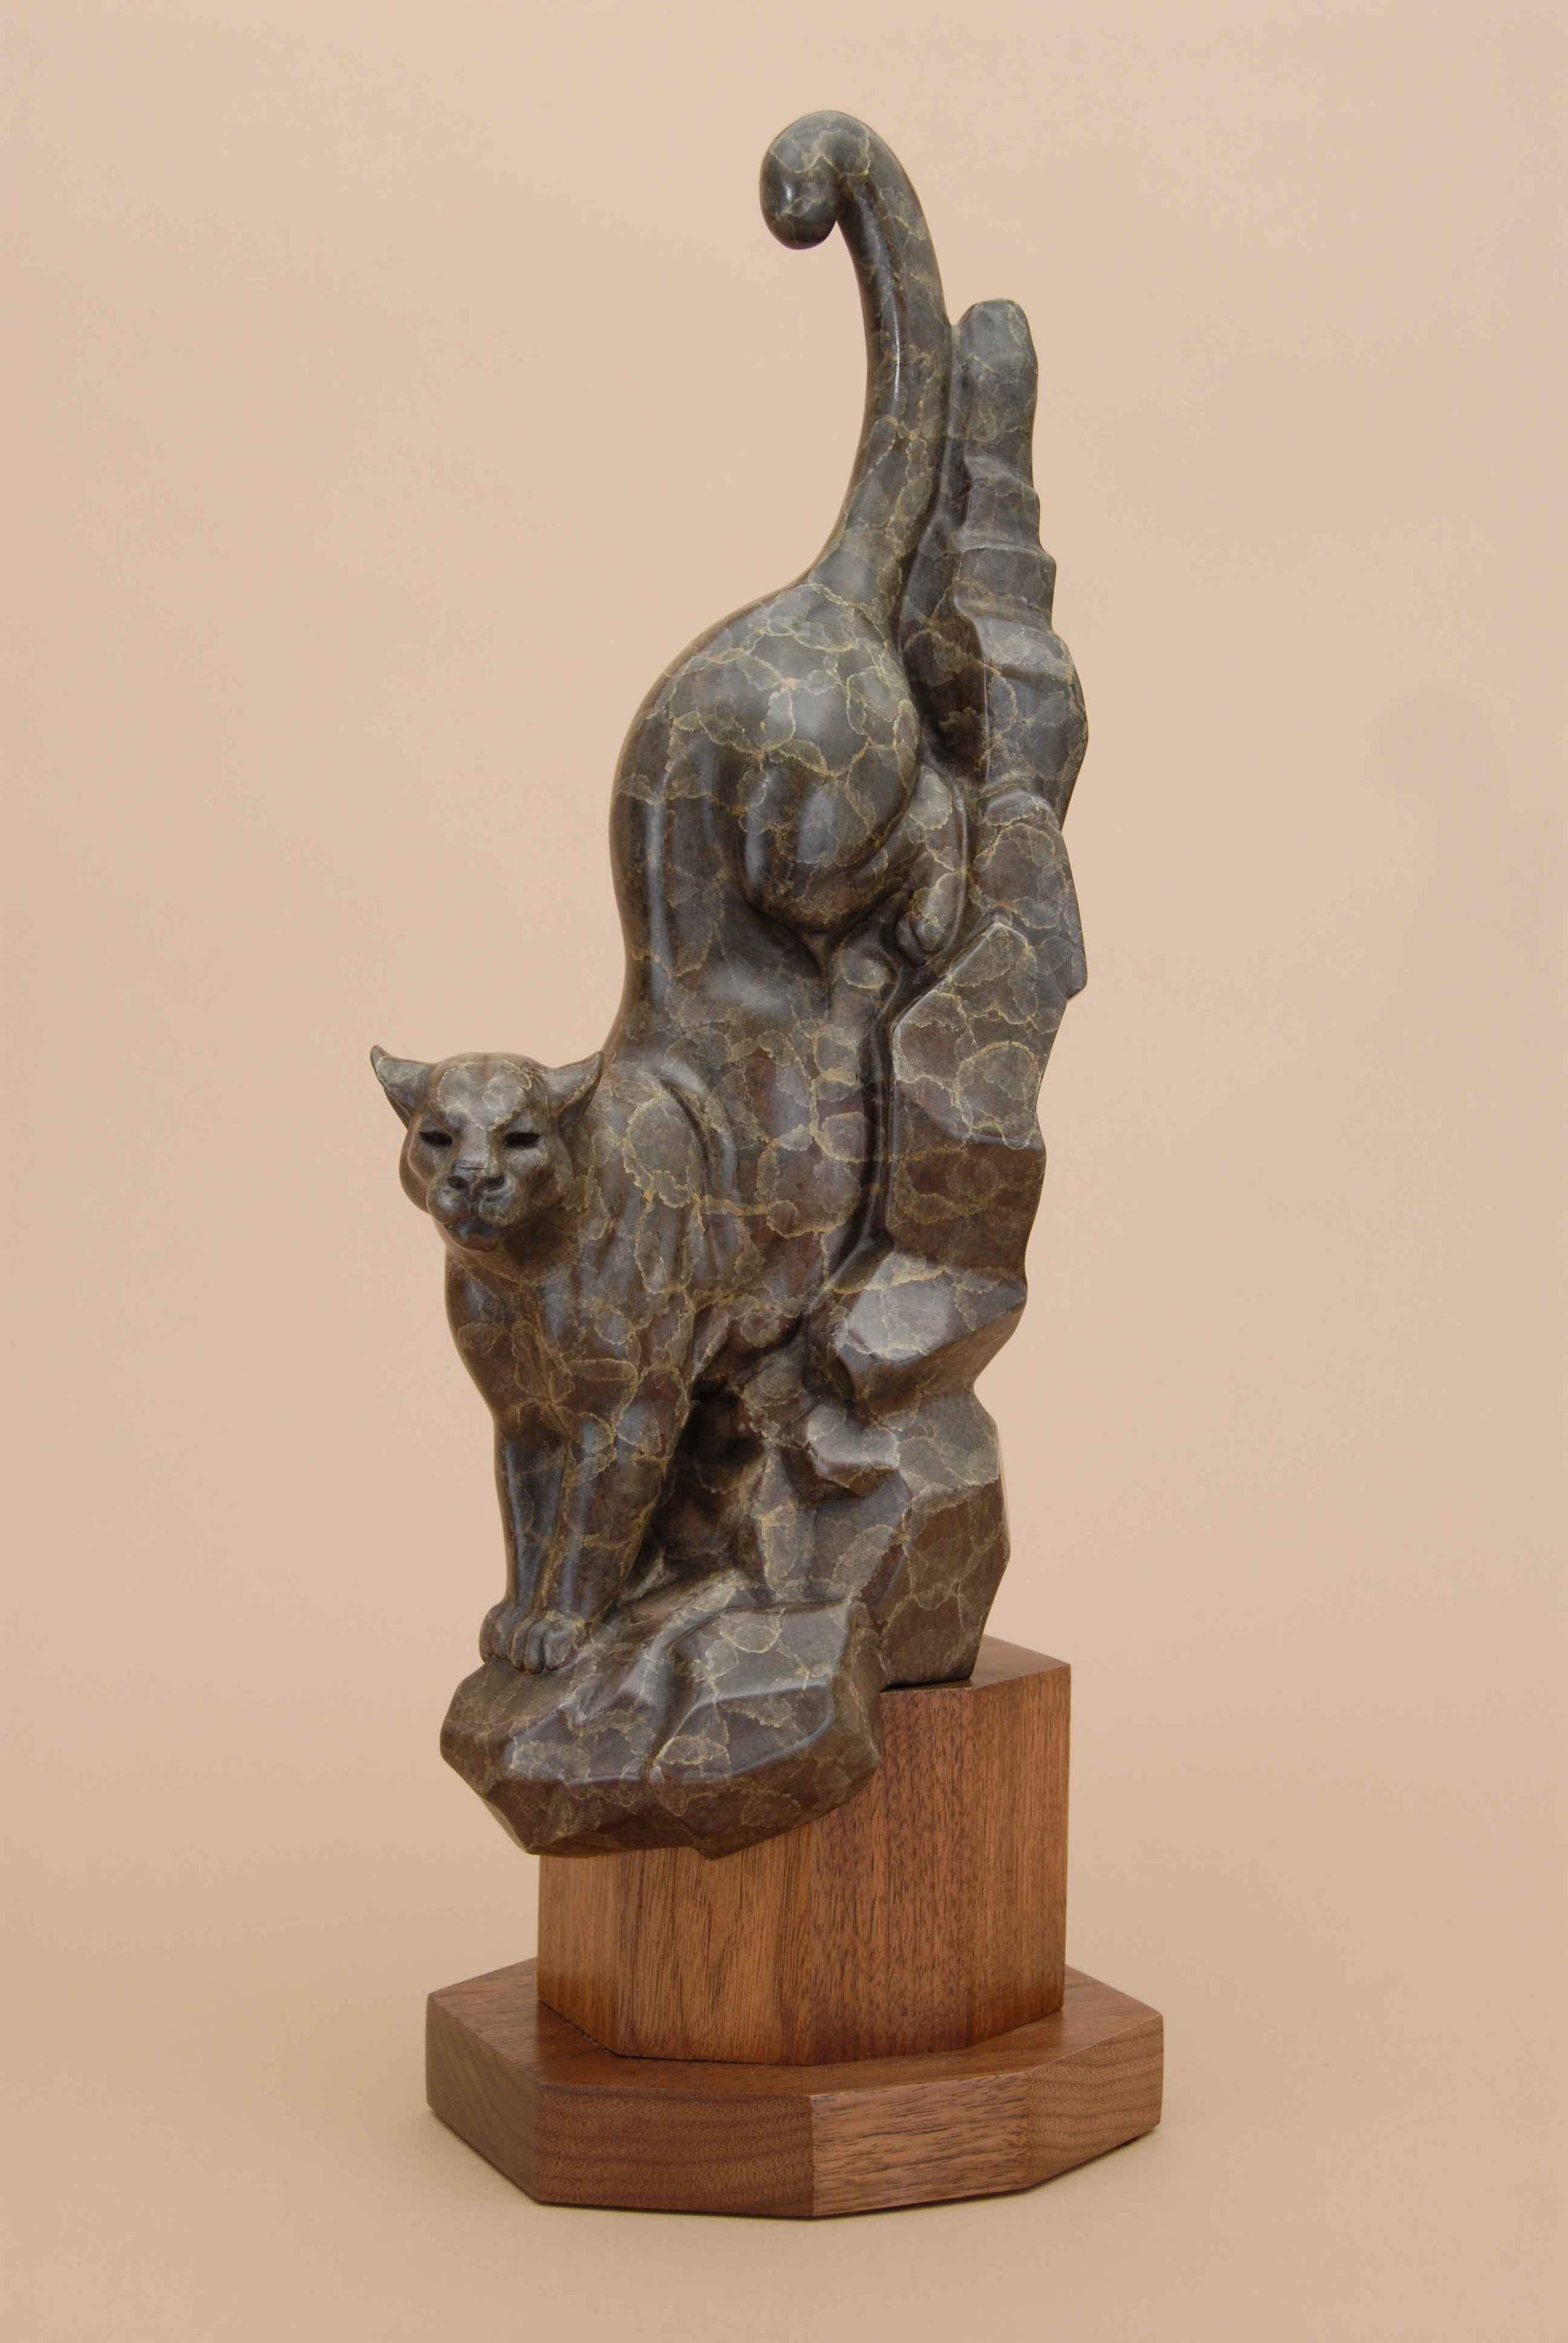 Gerald Balciar-Sorrel Sky Gallery-Sculpture-Canyon Princess (Small)